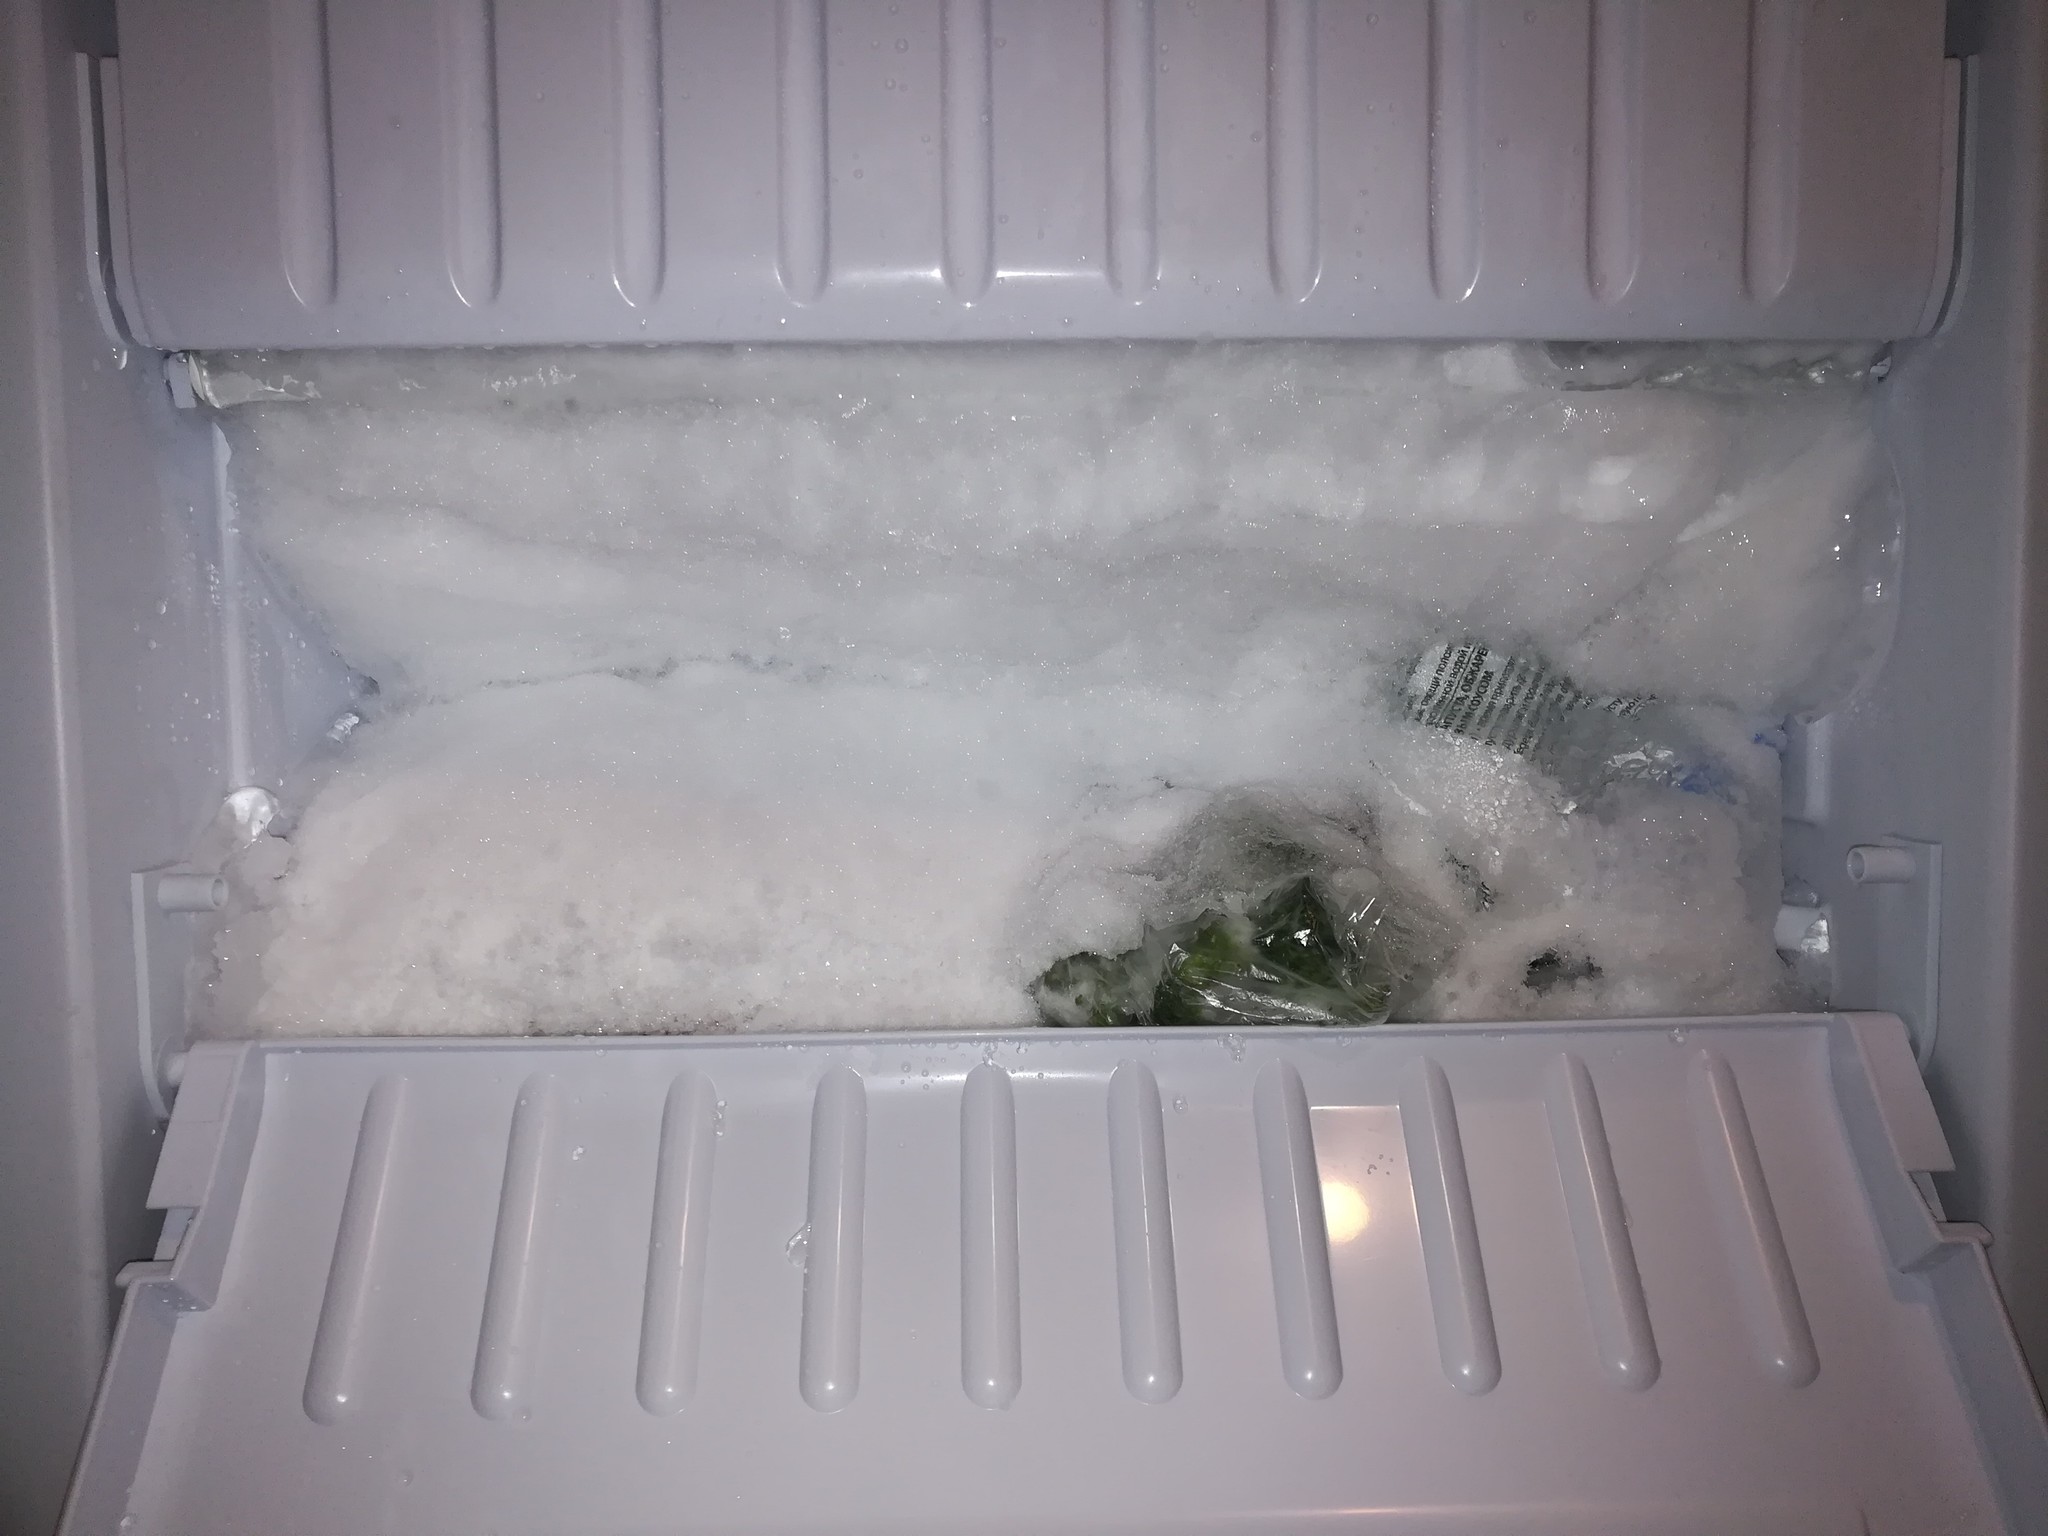 Лед в морозилке